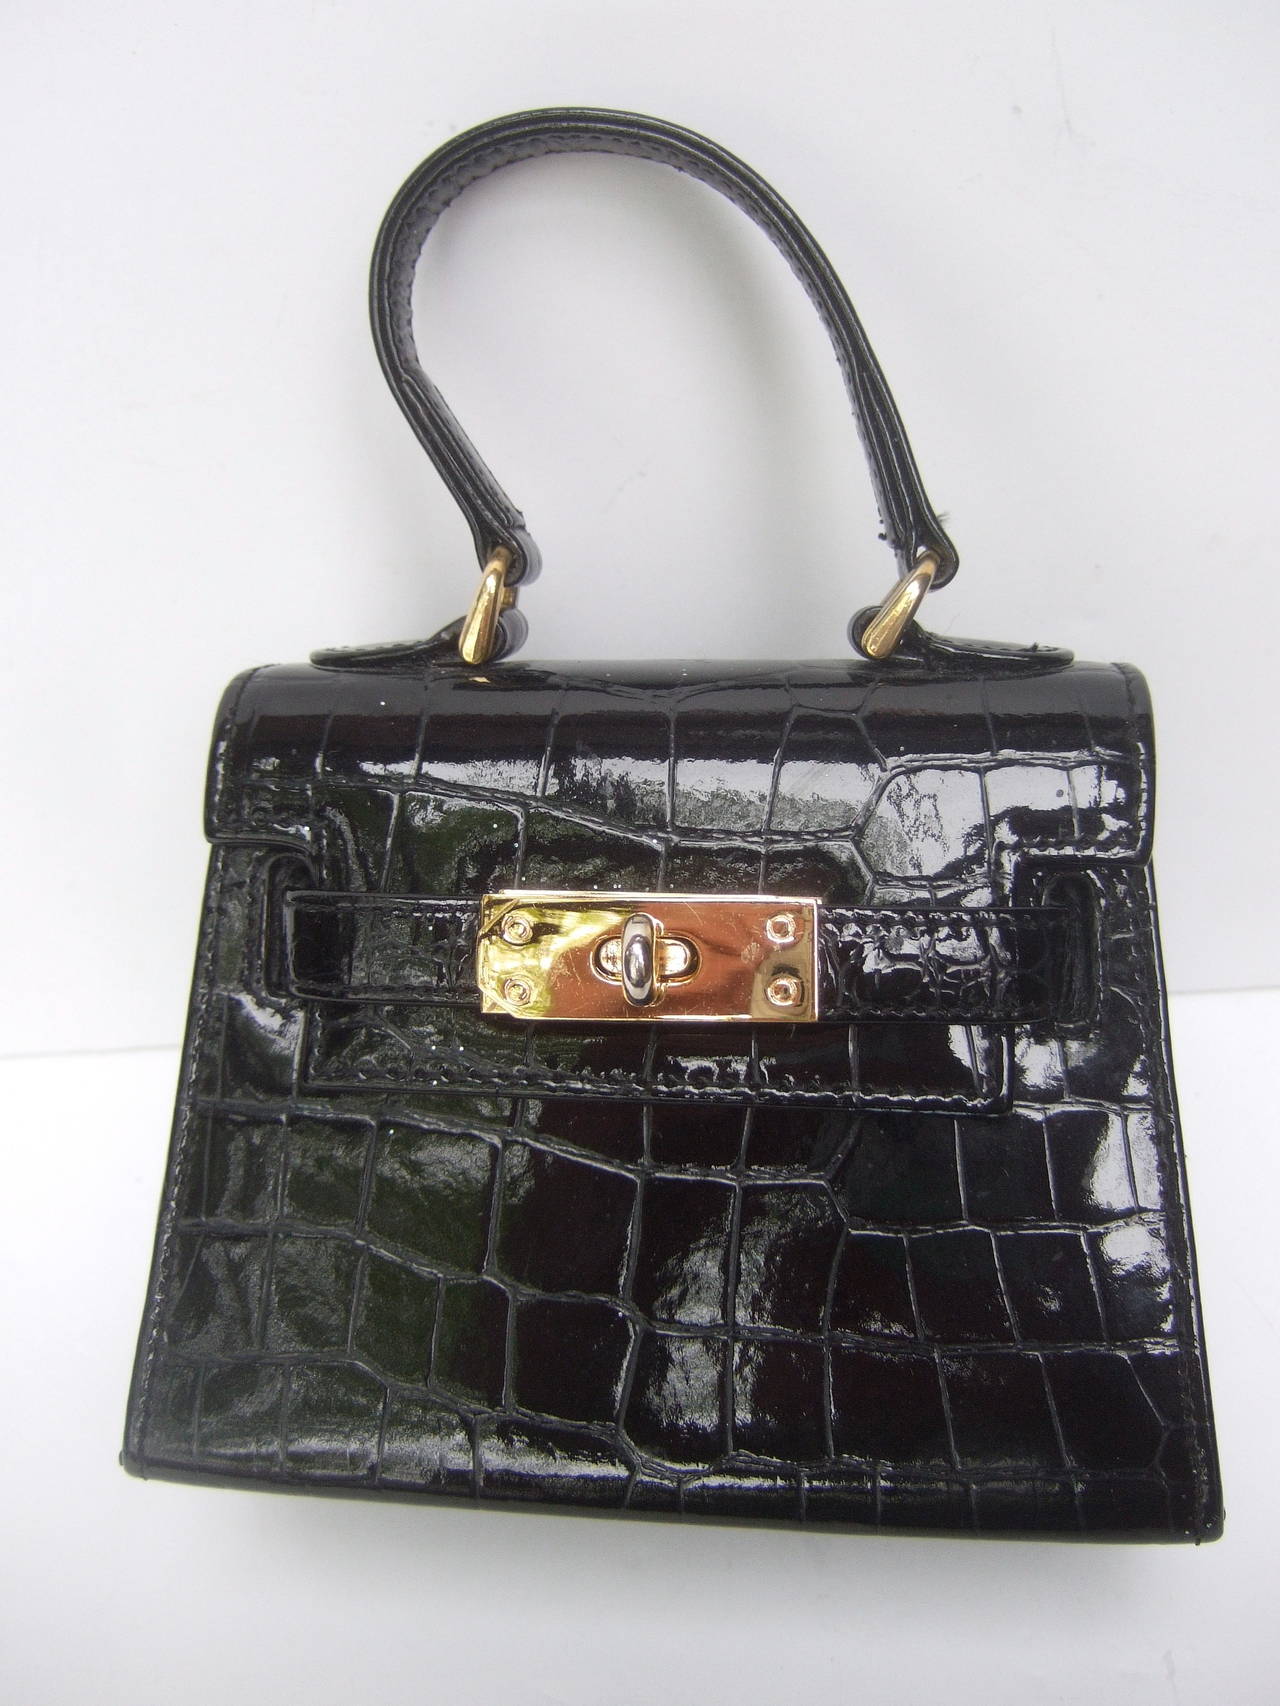 Women's Diminutive Black Embossed Patent Leather Handbag Made in Italy